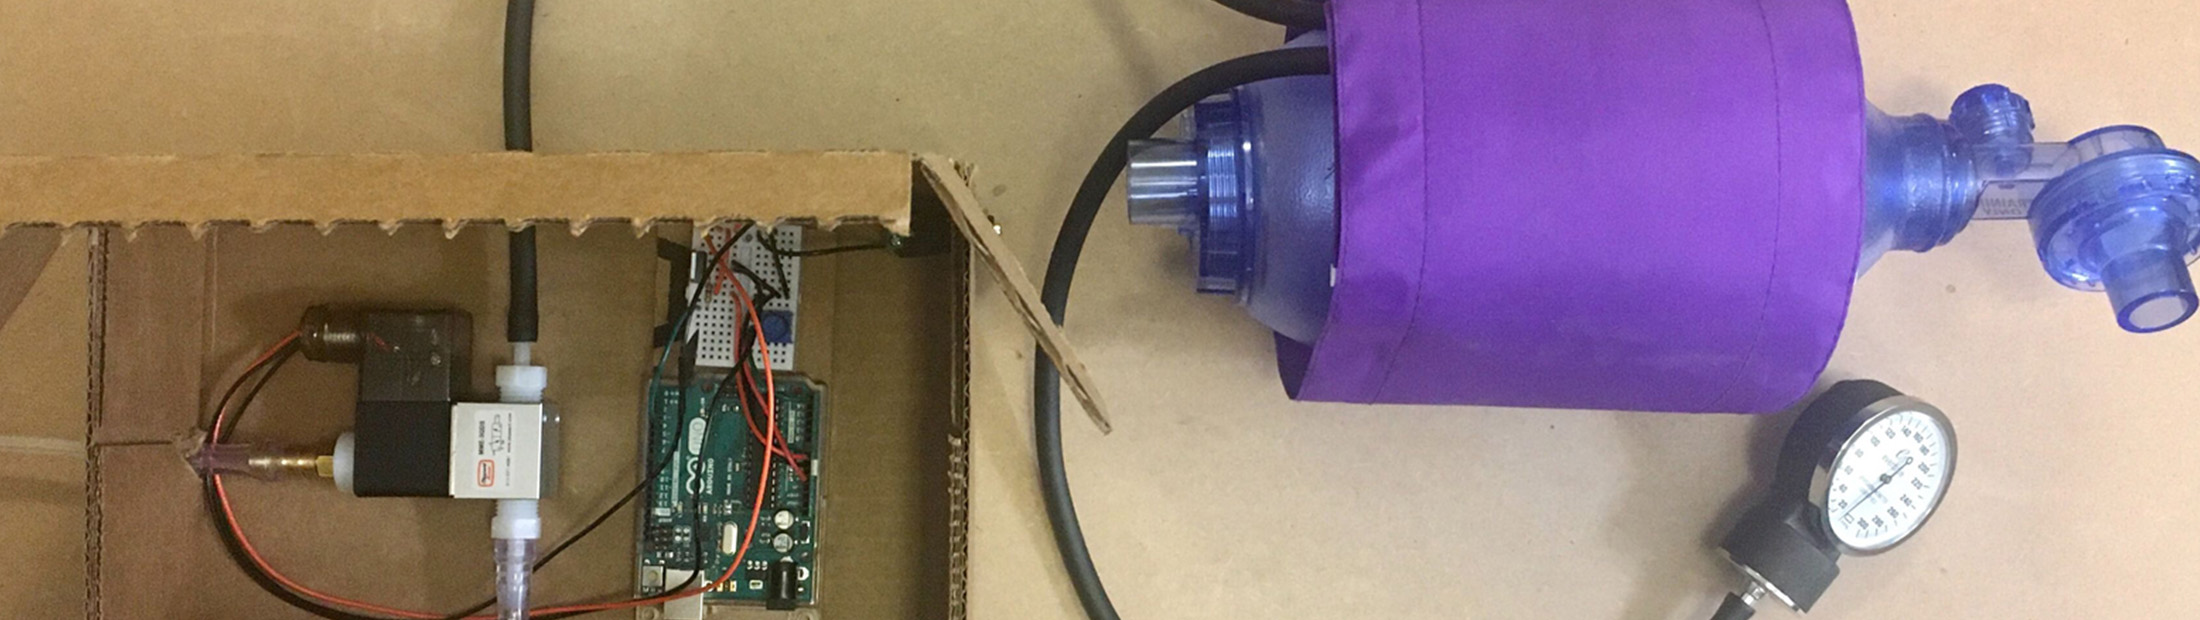 Makeshift ventilator prototype consisting of simple brown cardboard box and pump